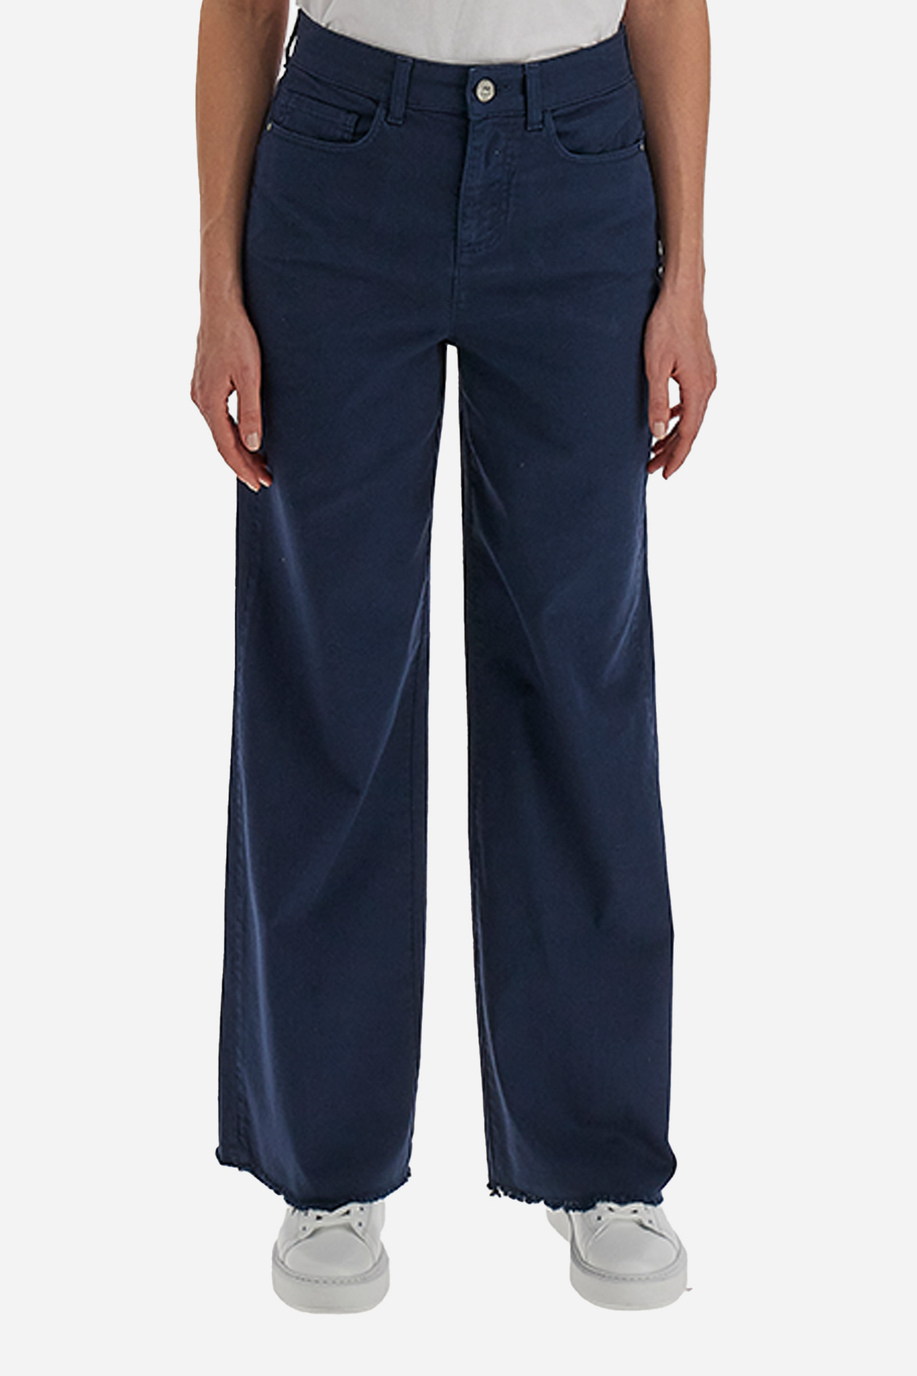 Pantalone jeans donna 5 tasche in tinta unita Spring Weekend - Villard - Pantaloni | La Martina - Official Online Shop